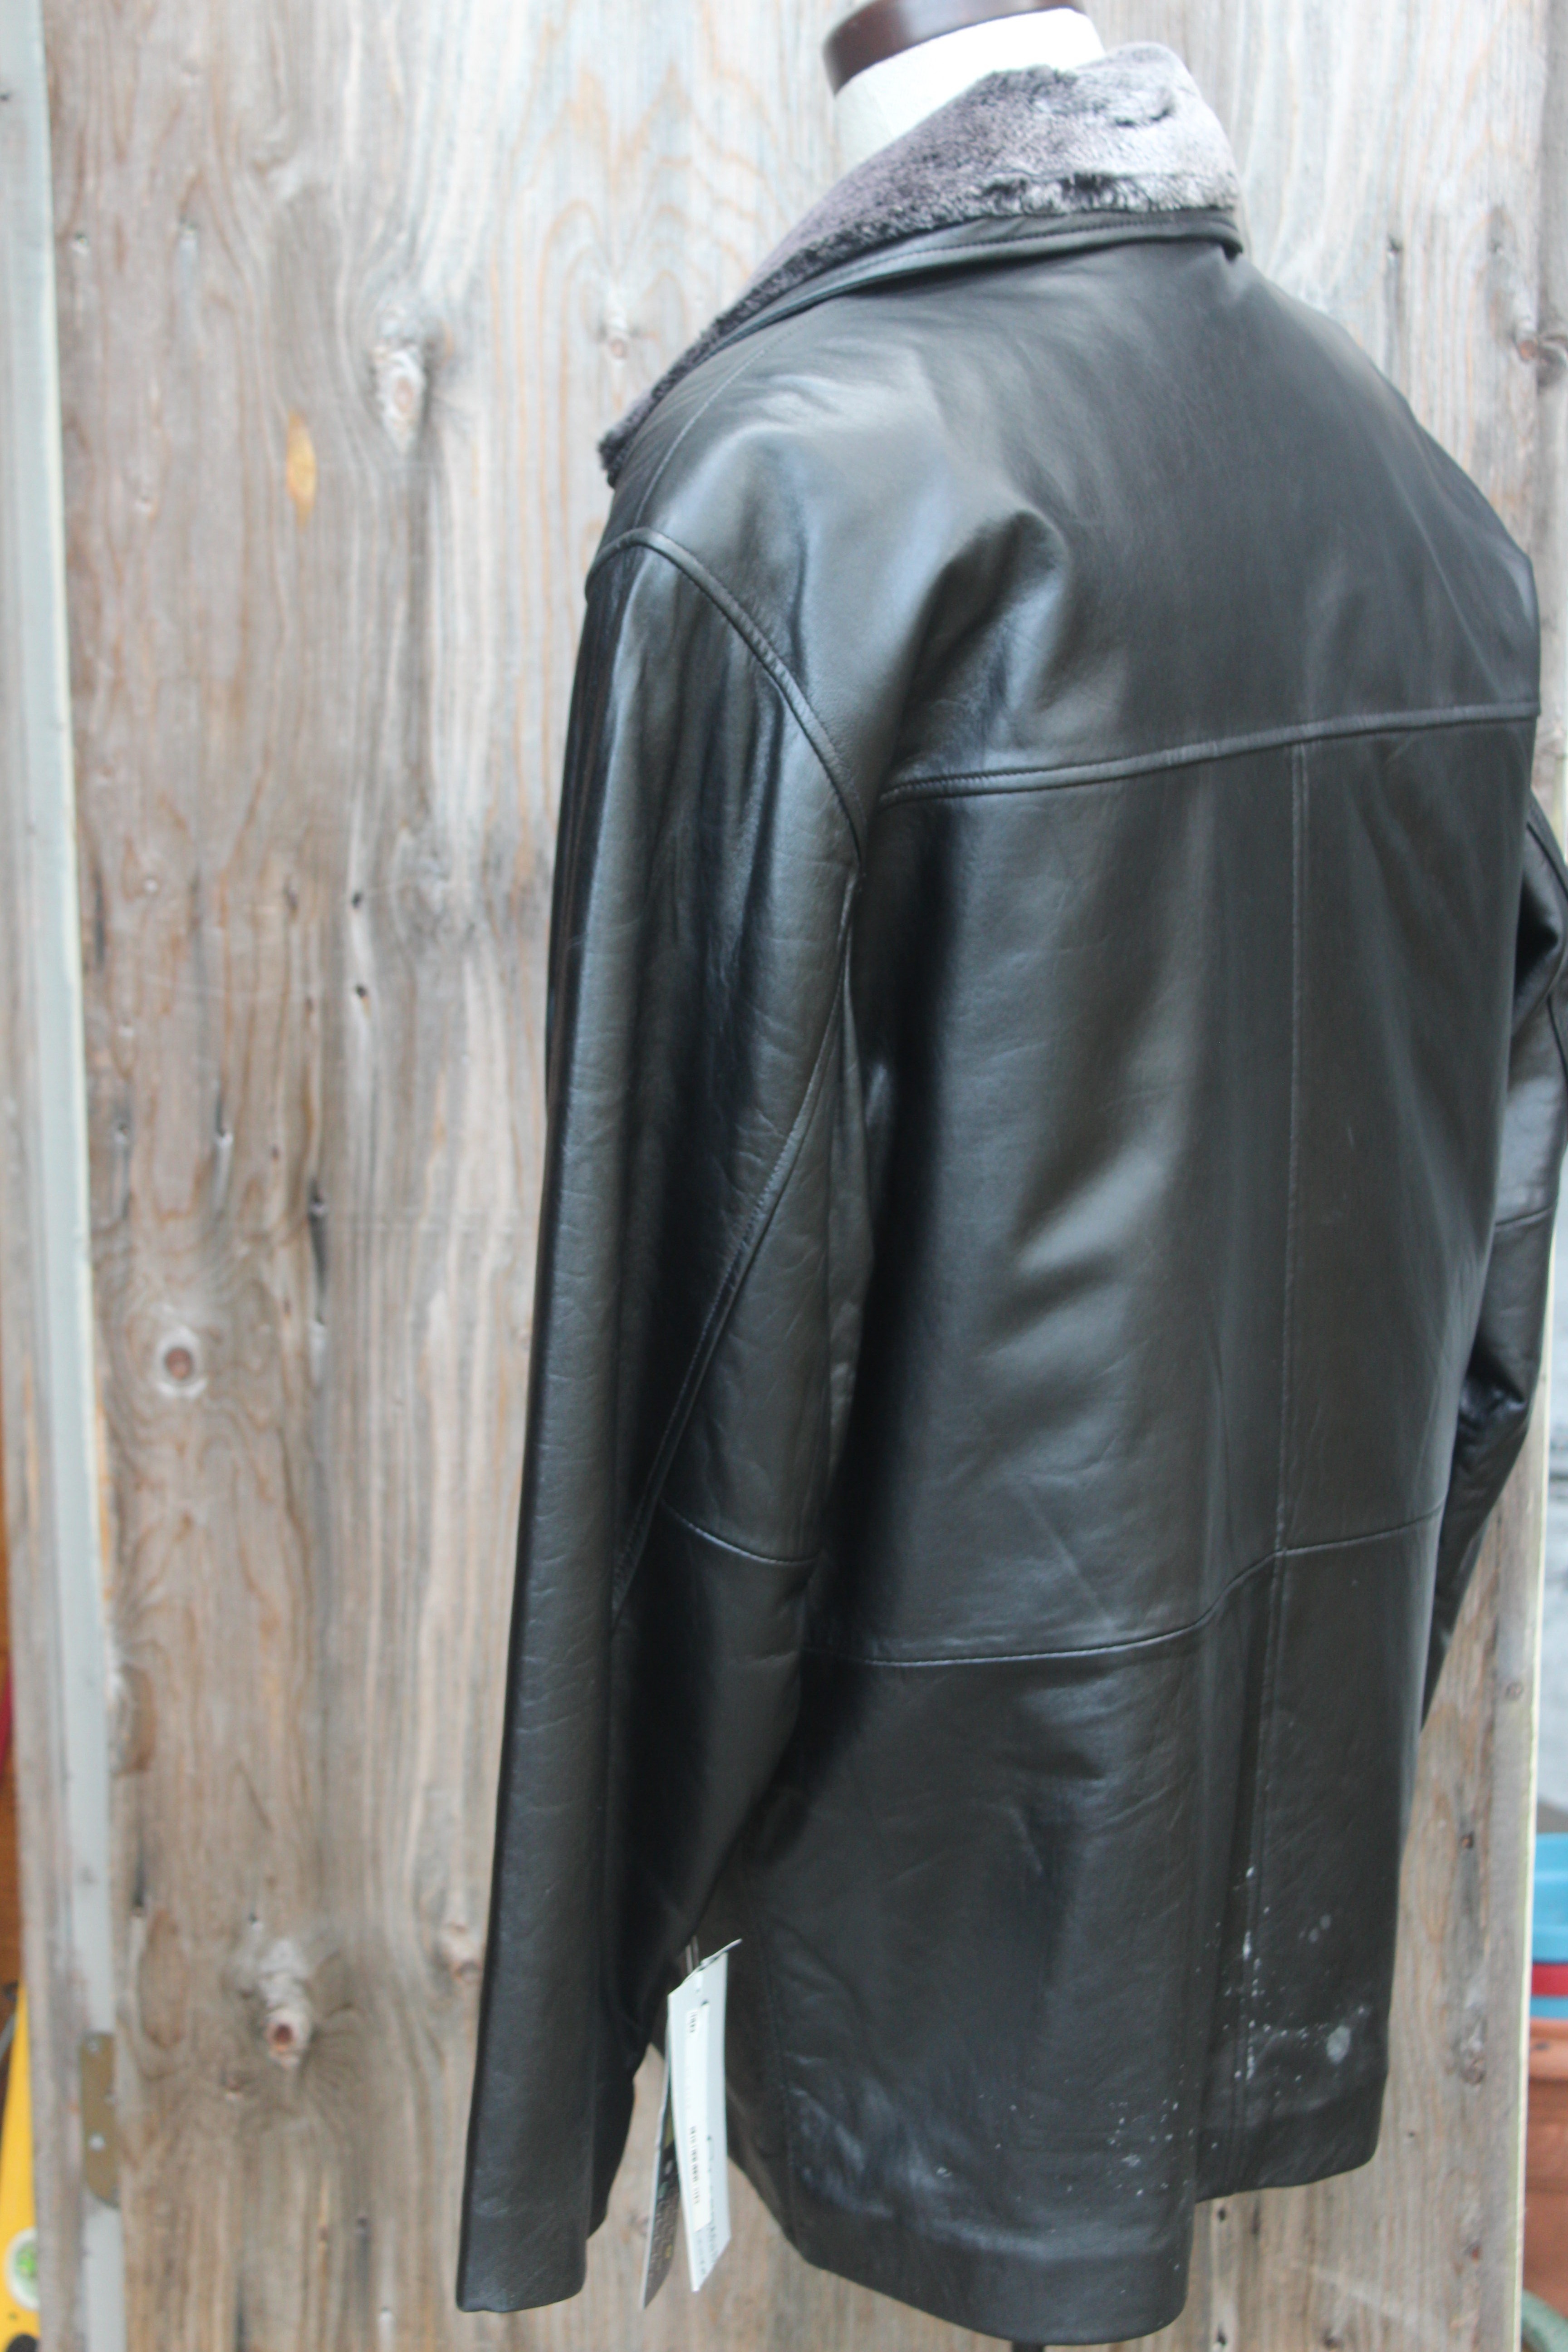 Black Leather- $375.00
Coppola Classics Leatherwear
Style #: 7644RM